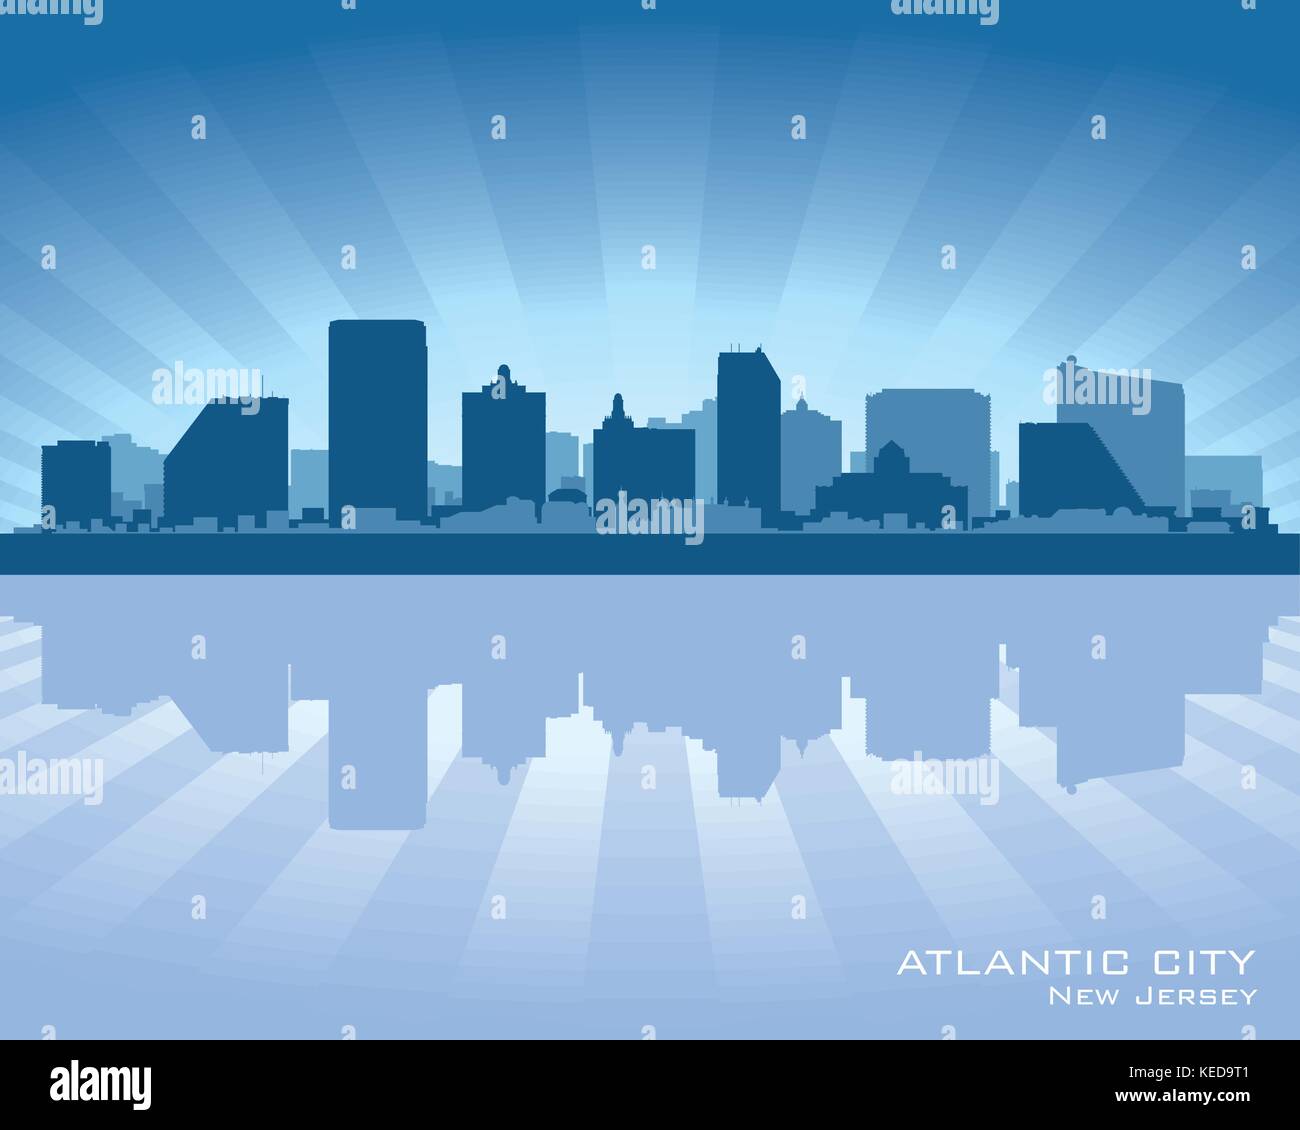 Atlantic City, New Jersey Skyline Silhouette. Vektor-illustration Stock Vektor